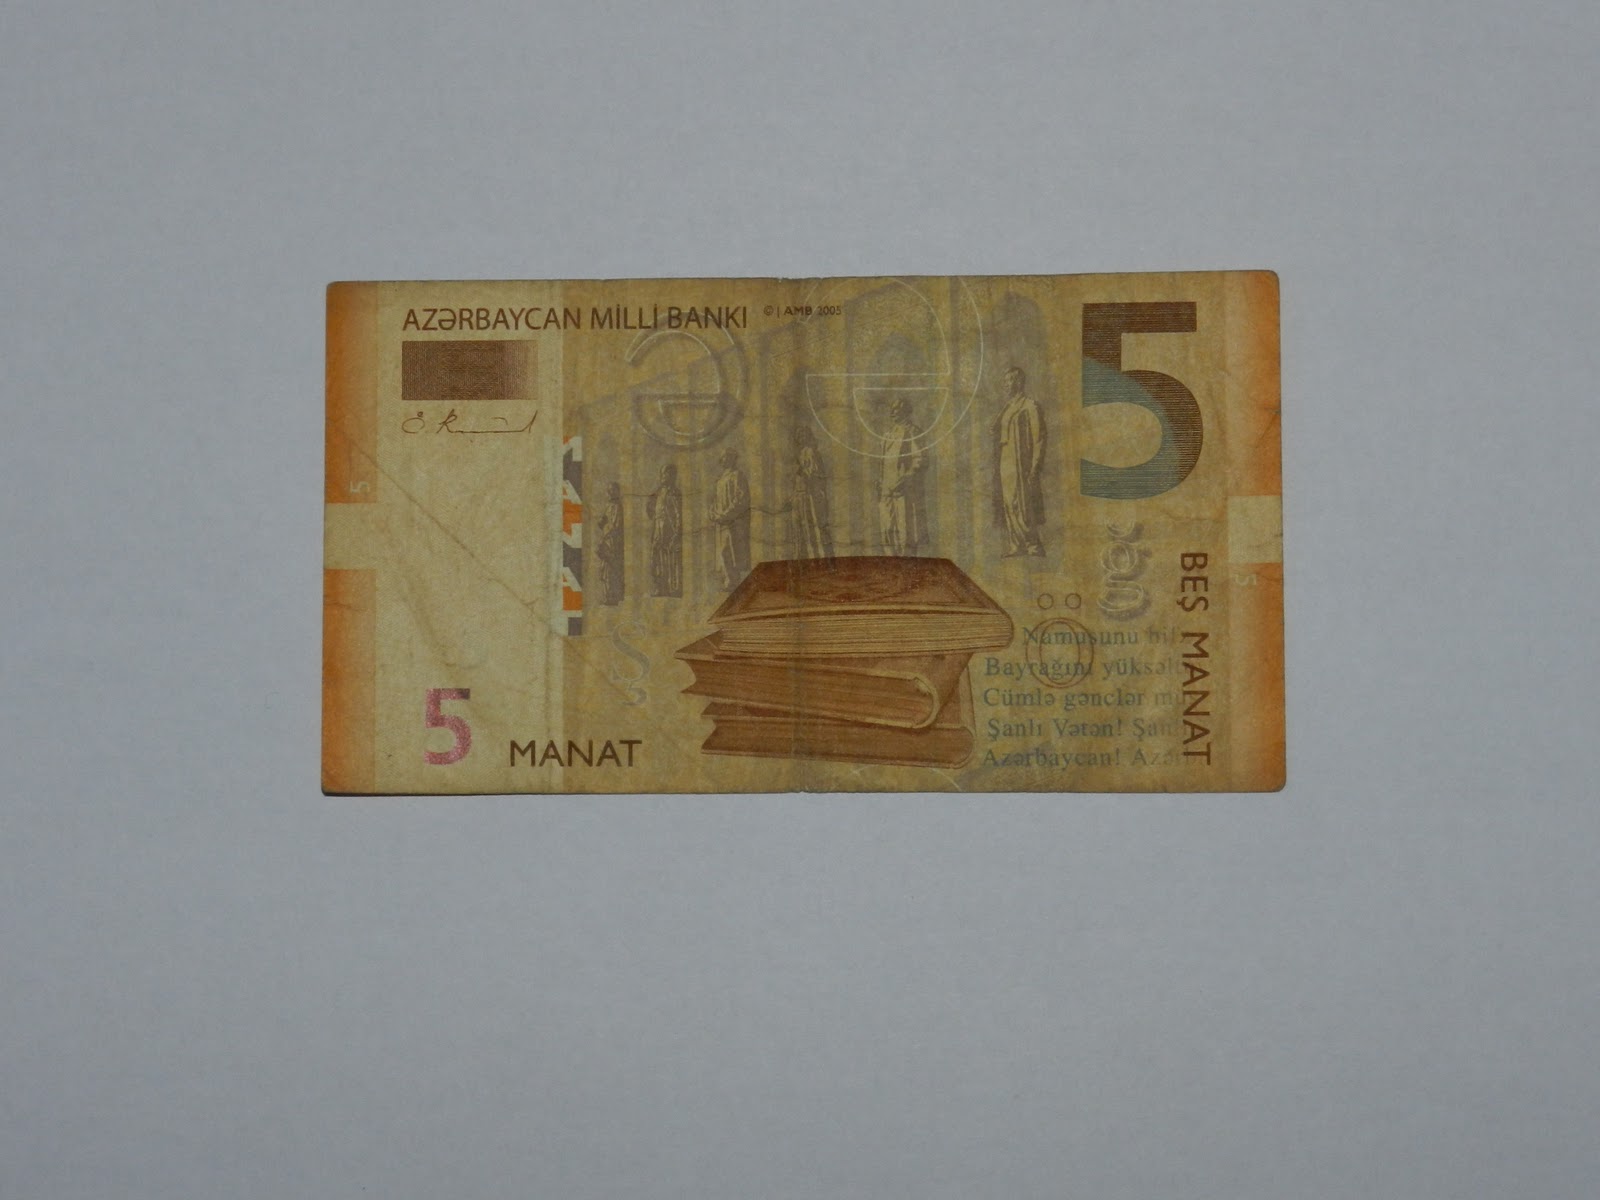 1500 рублей в манатах. 5 Манат. 5,5 Манат. Банкнота Азербайджан 1 манат. Азербайджанский манат все банкноты и монеты.